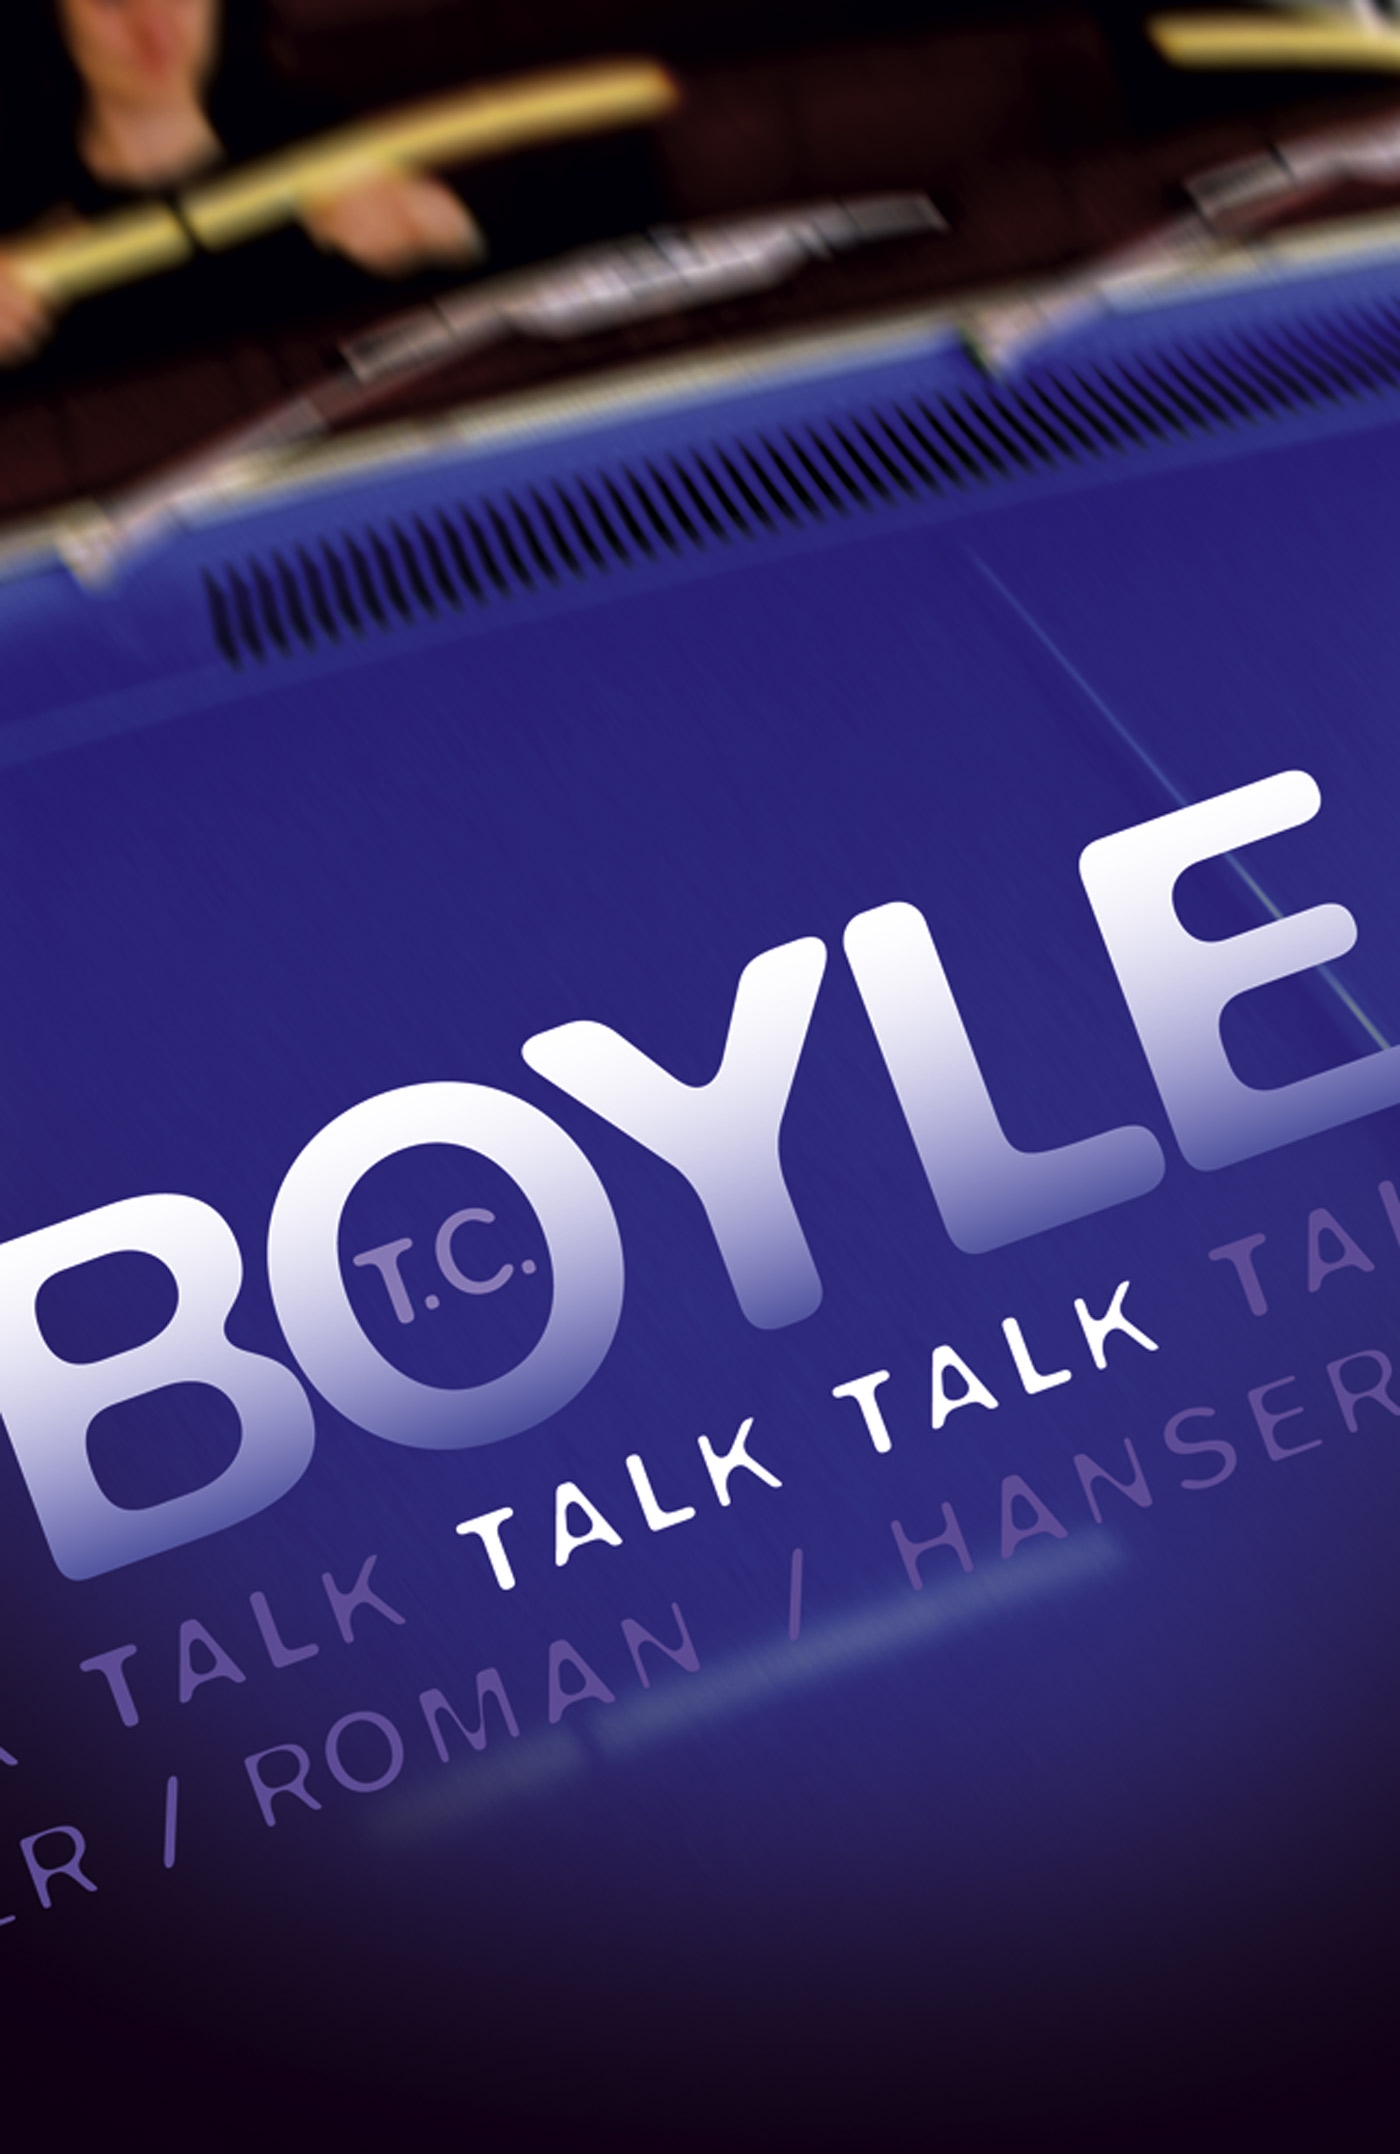 T.C. Boyle ~ Talk Talk: Roman 9783446207585 - Picture 1 of 1